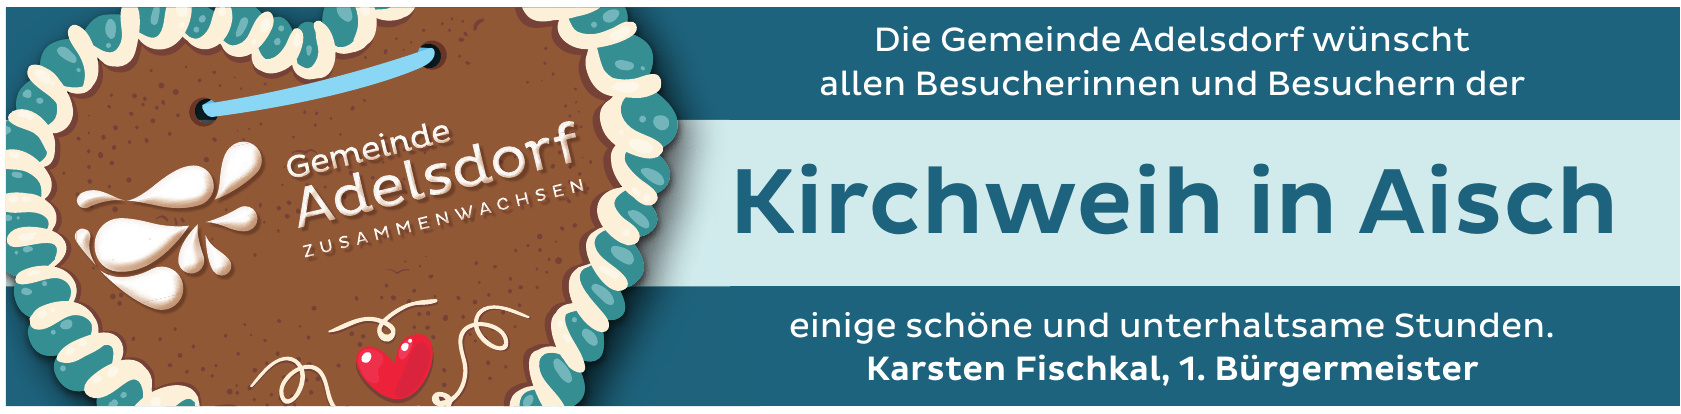 Kirchweih in Aisch